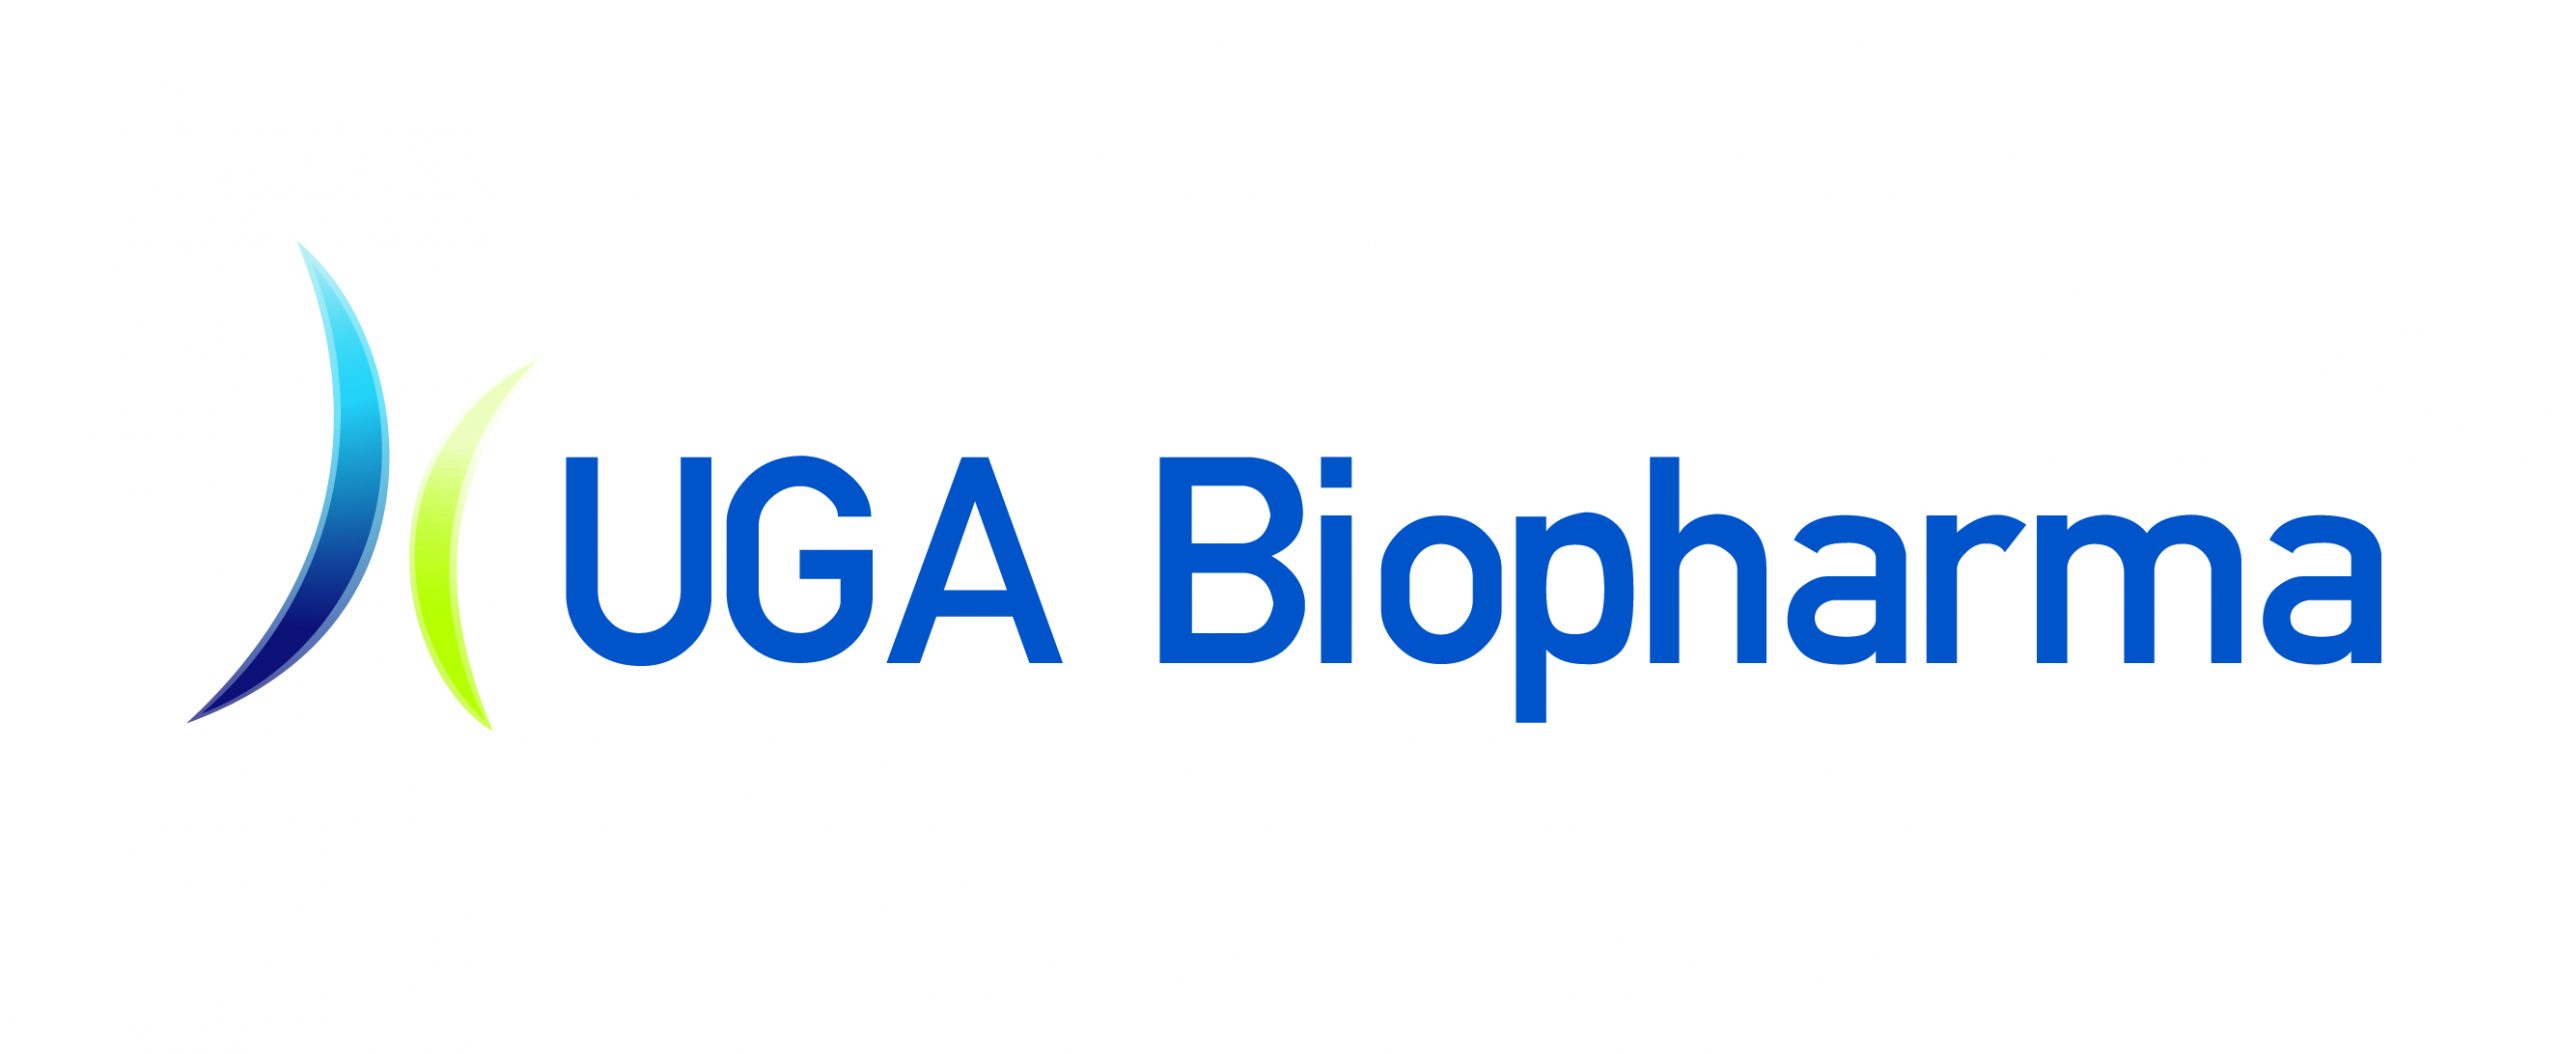 UGA Biopharma to celebrate COVID-friendly Christmas